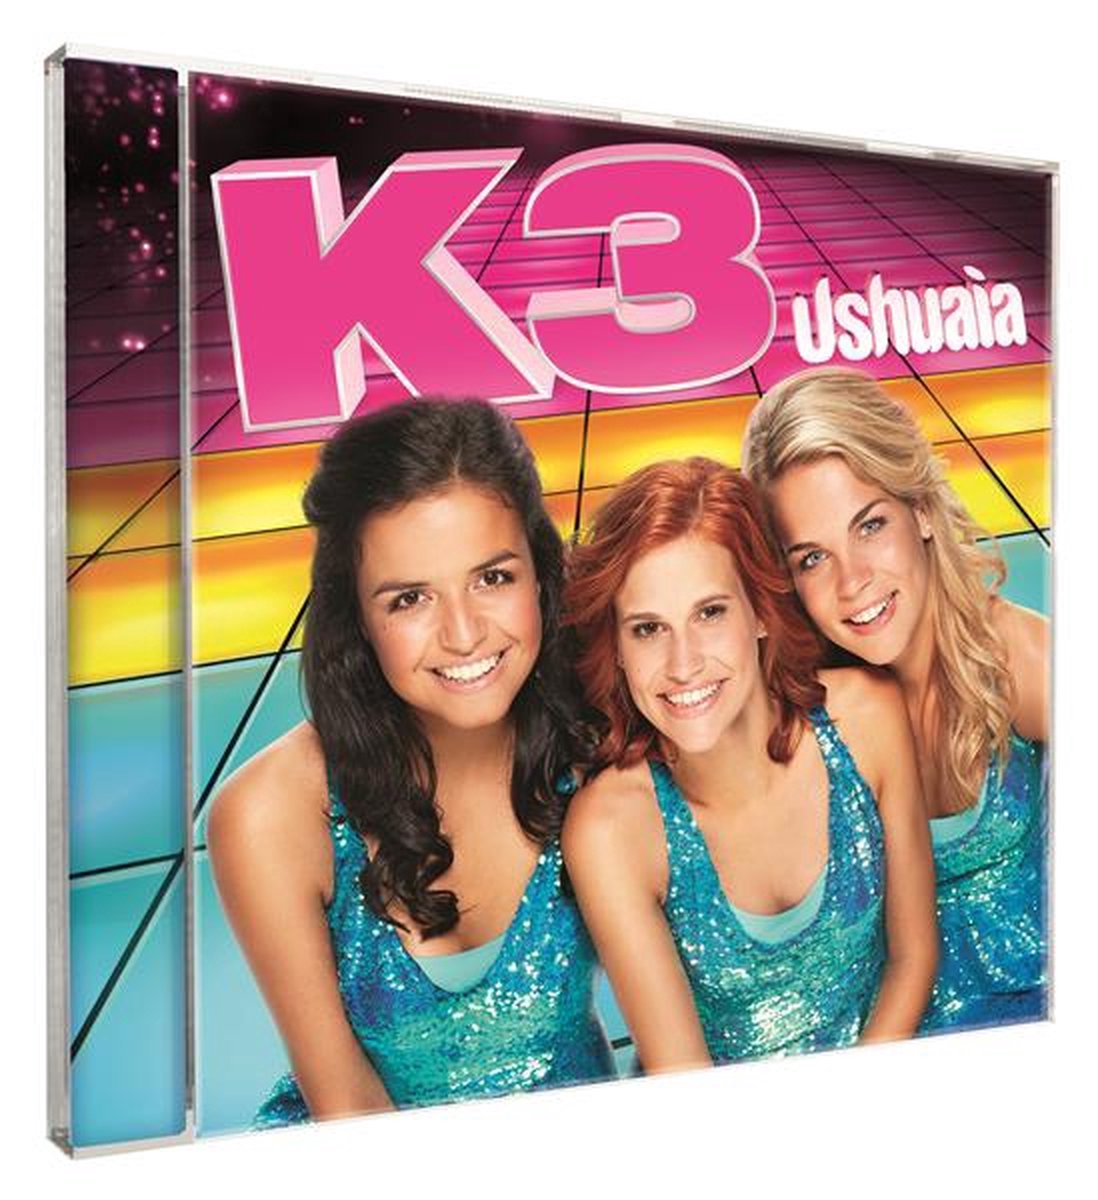 Ushuaia (CD) - K3